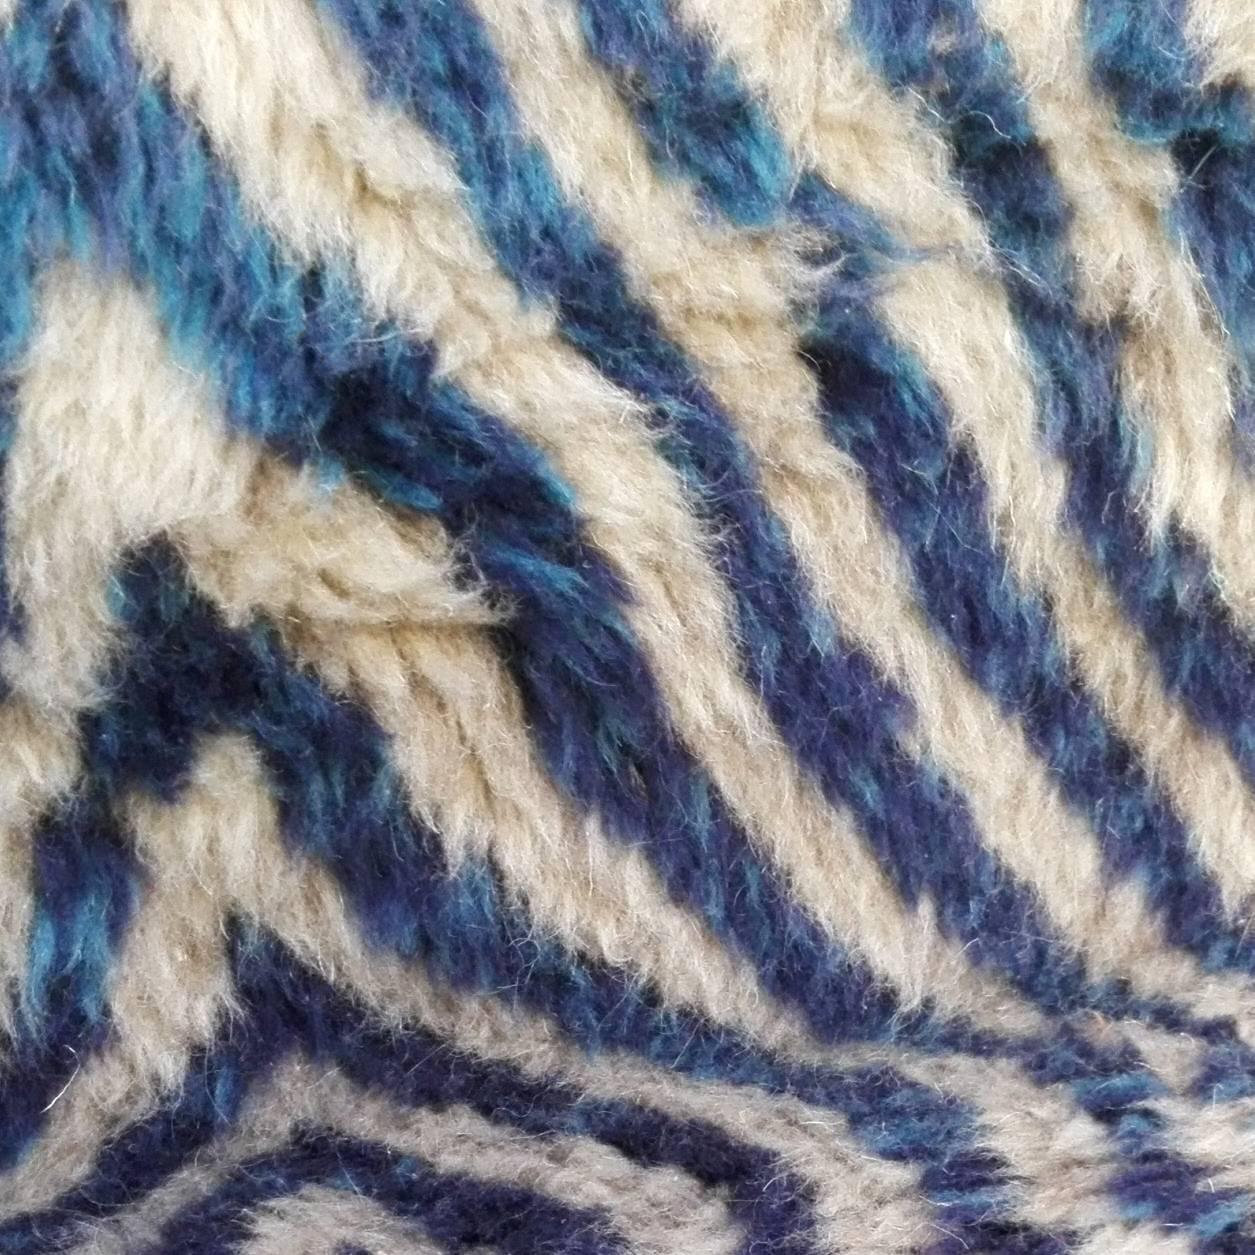 blue moroccan rug